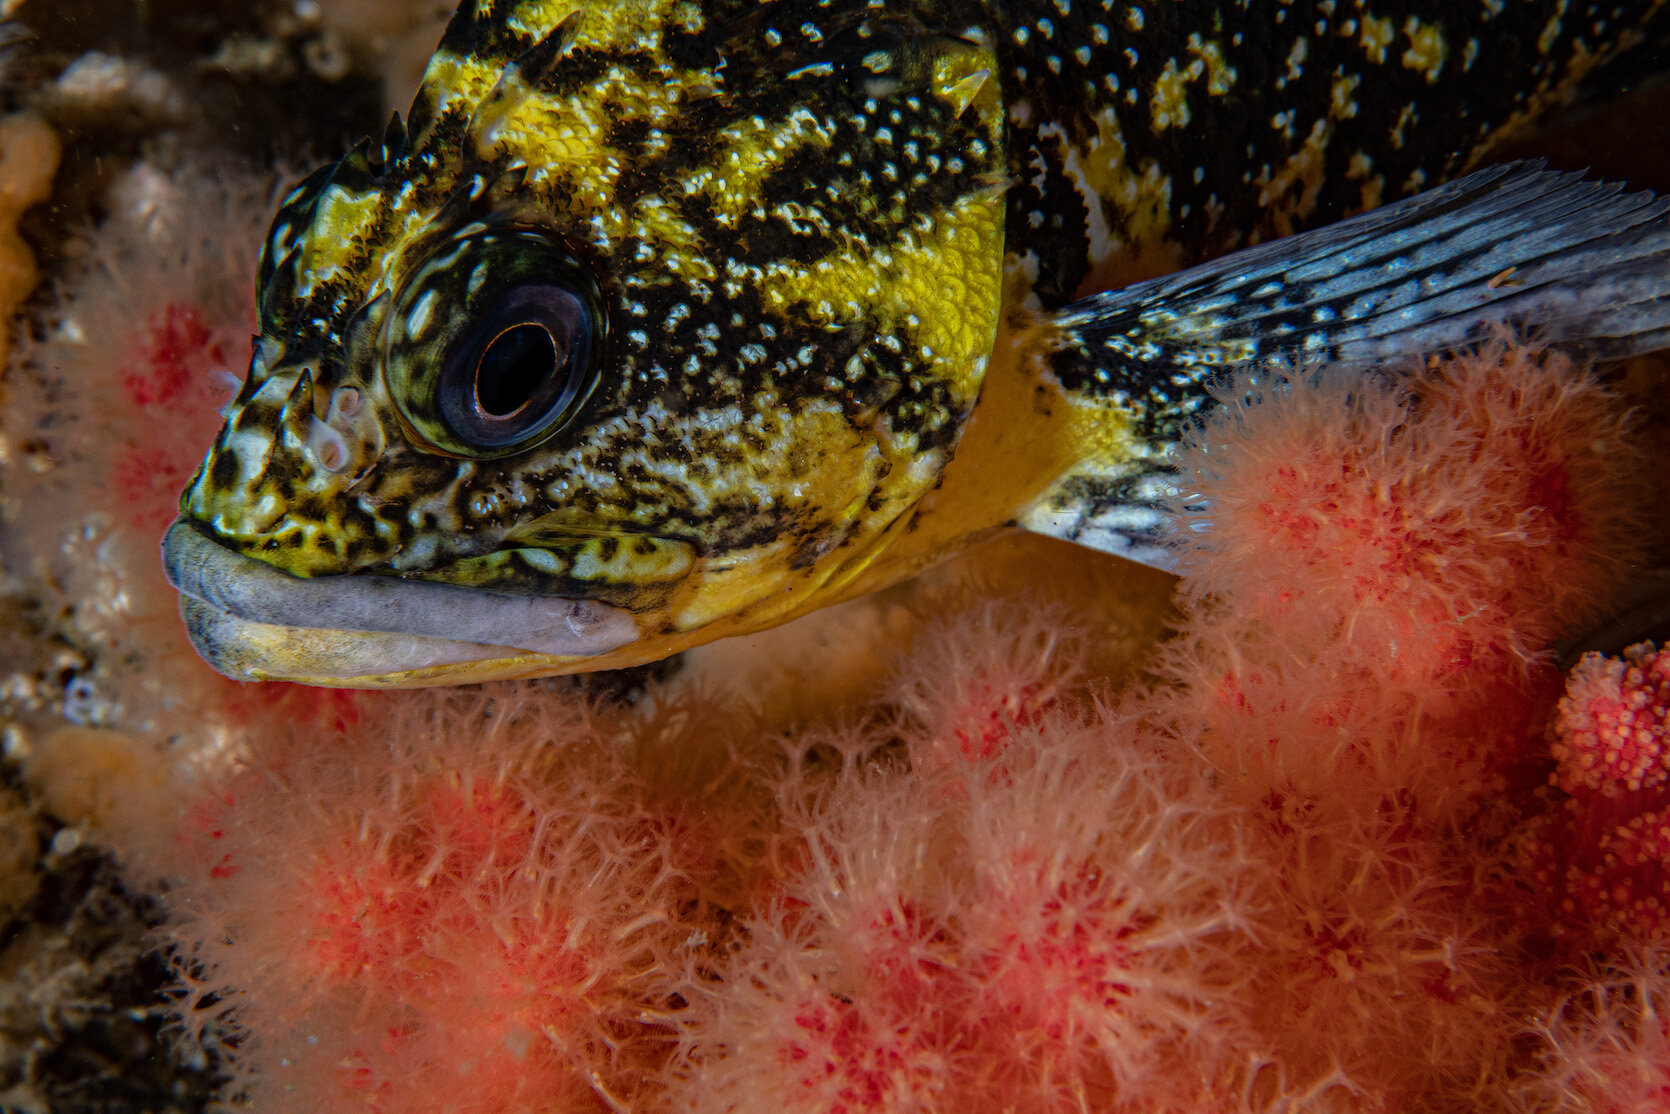 British Columbia Rockfish China Rockfish and Seastrawberry by Laura Tesler